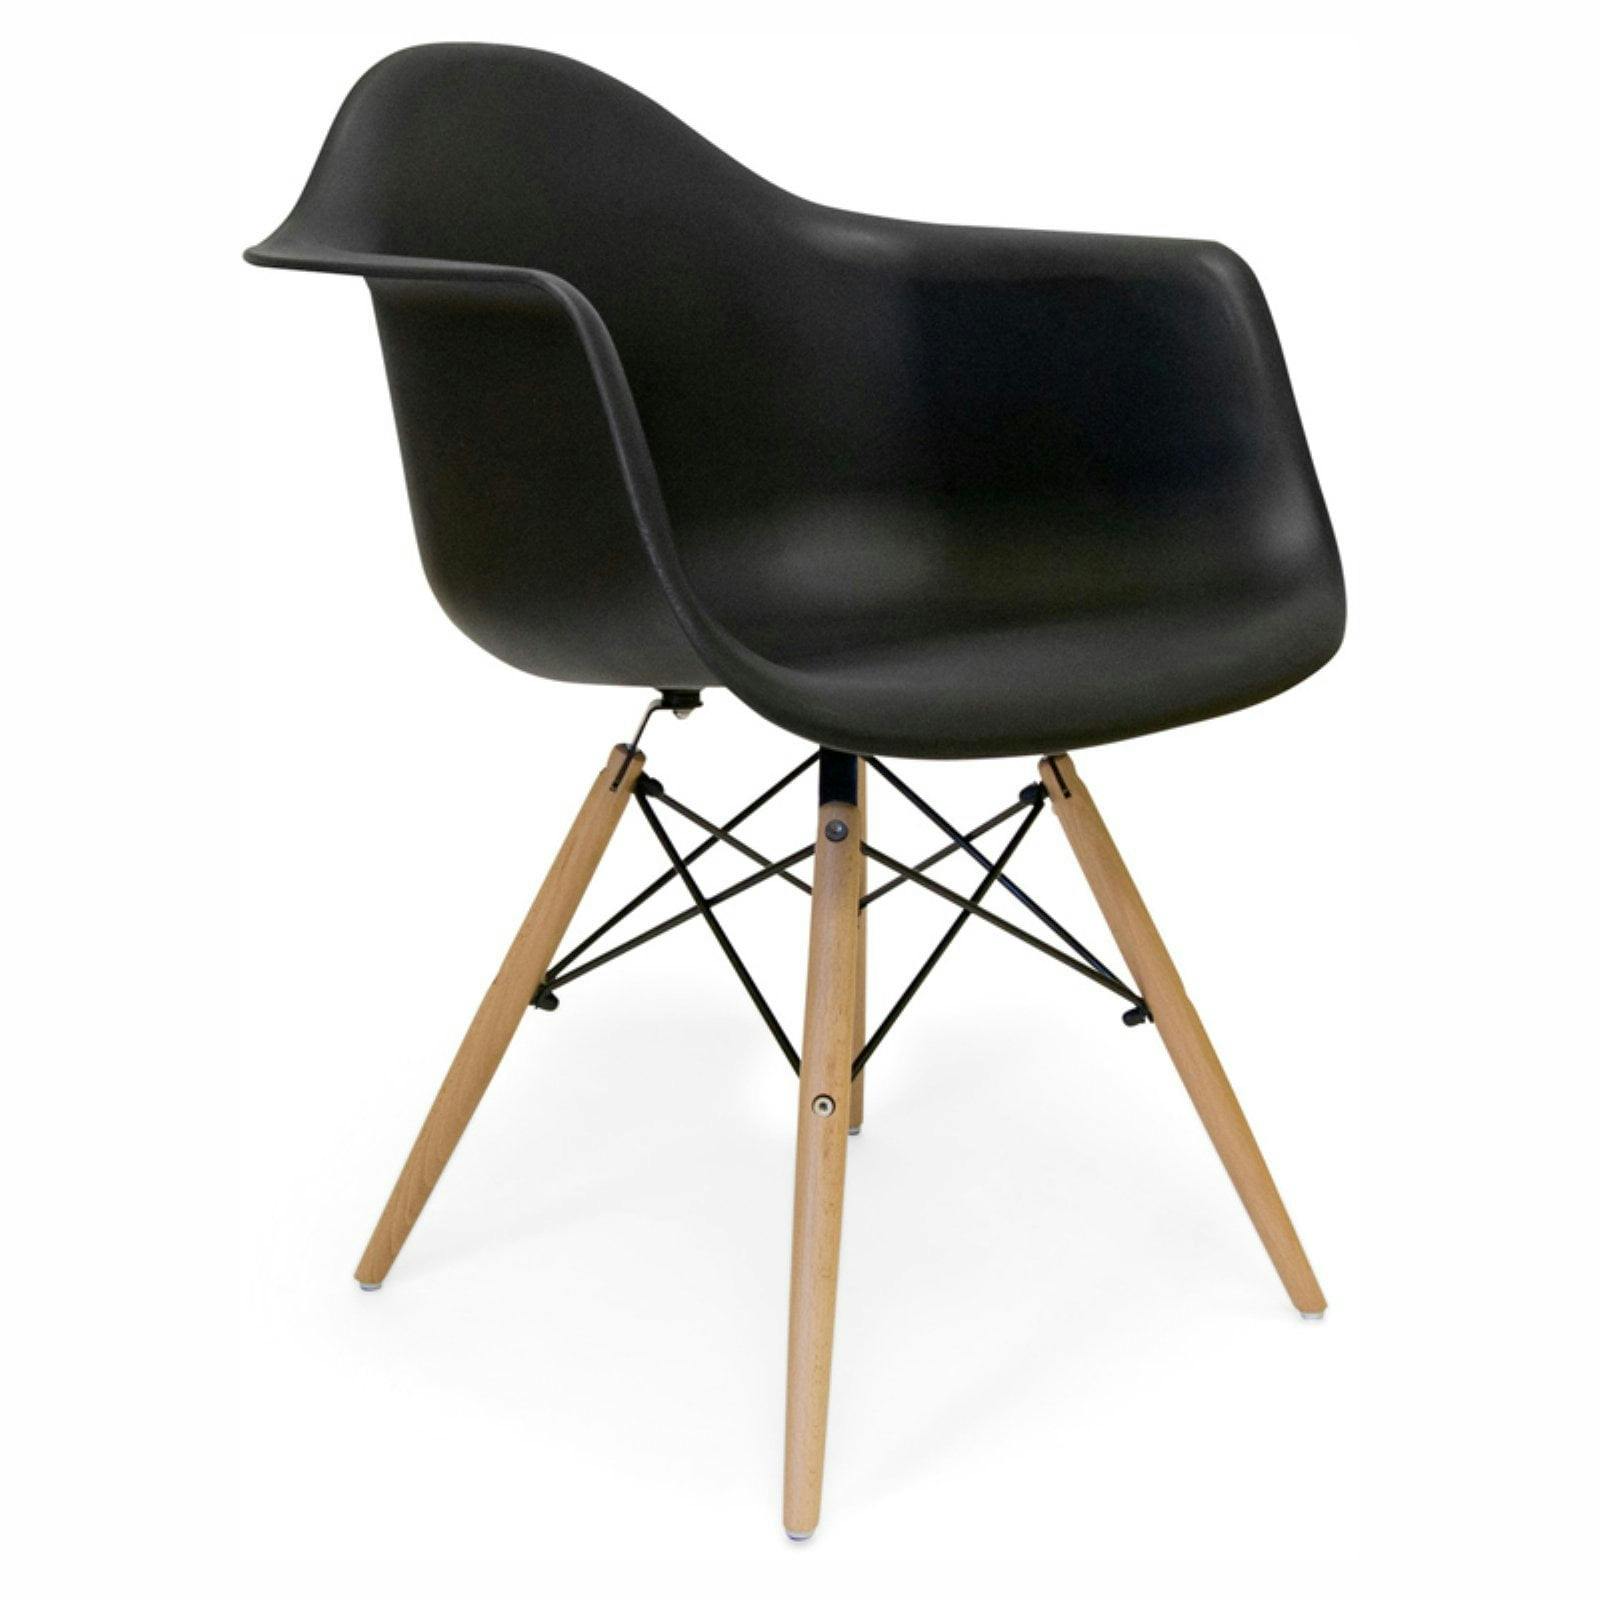 Modern Classic Dijon-Style Black Metal Arm Chair with Wood Dowel Legs